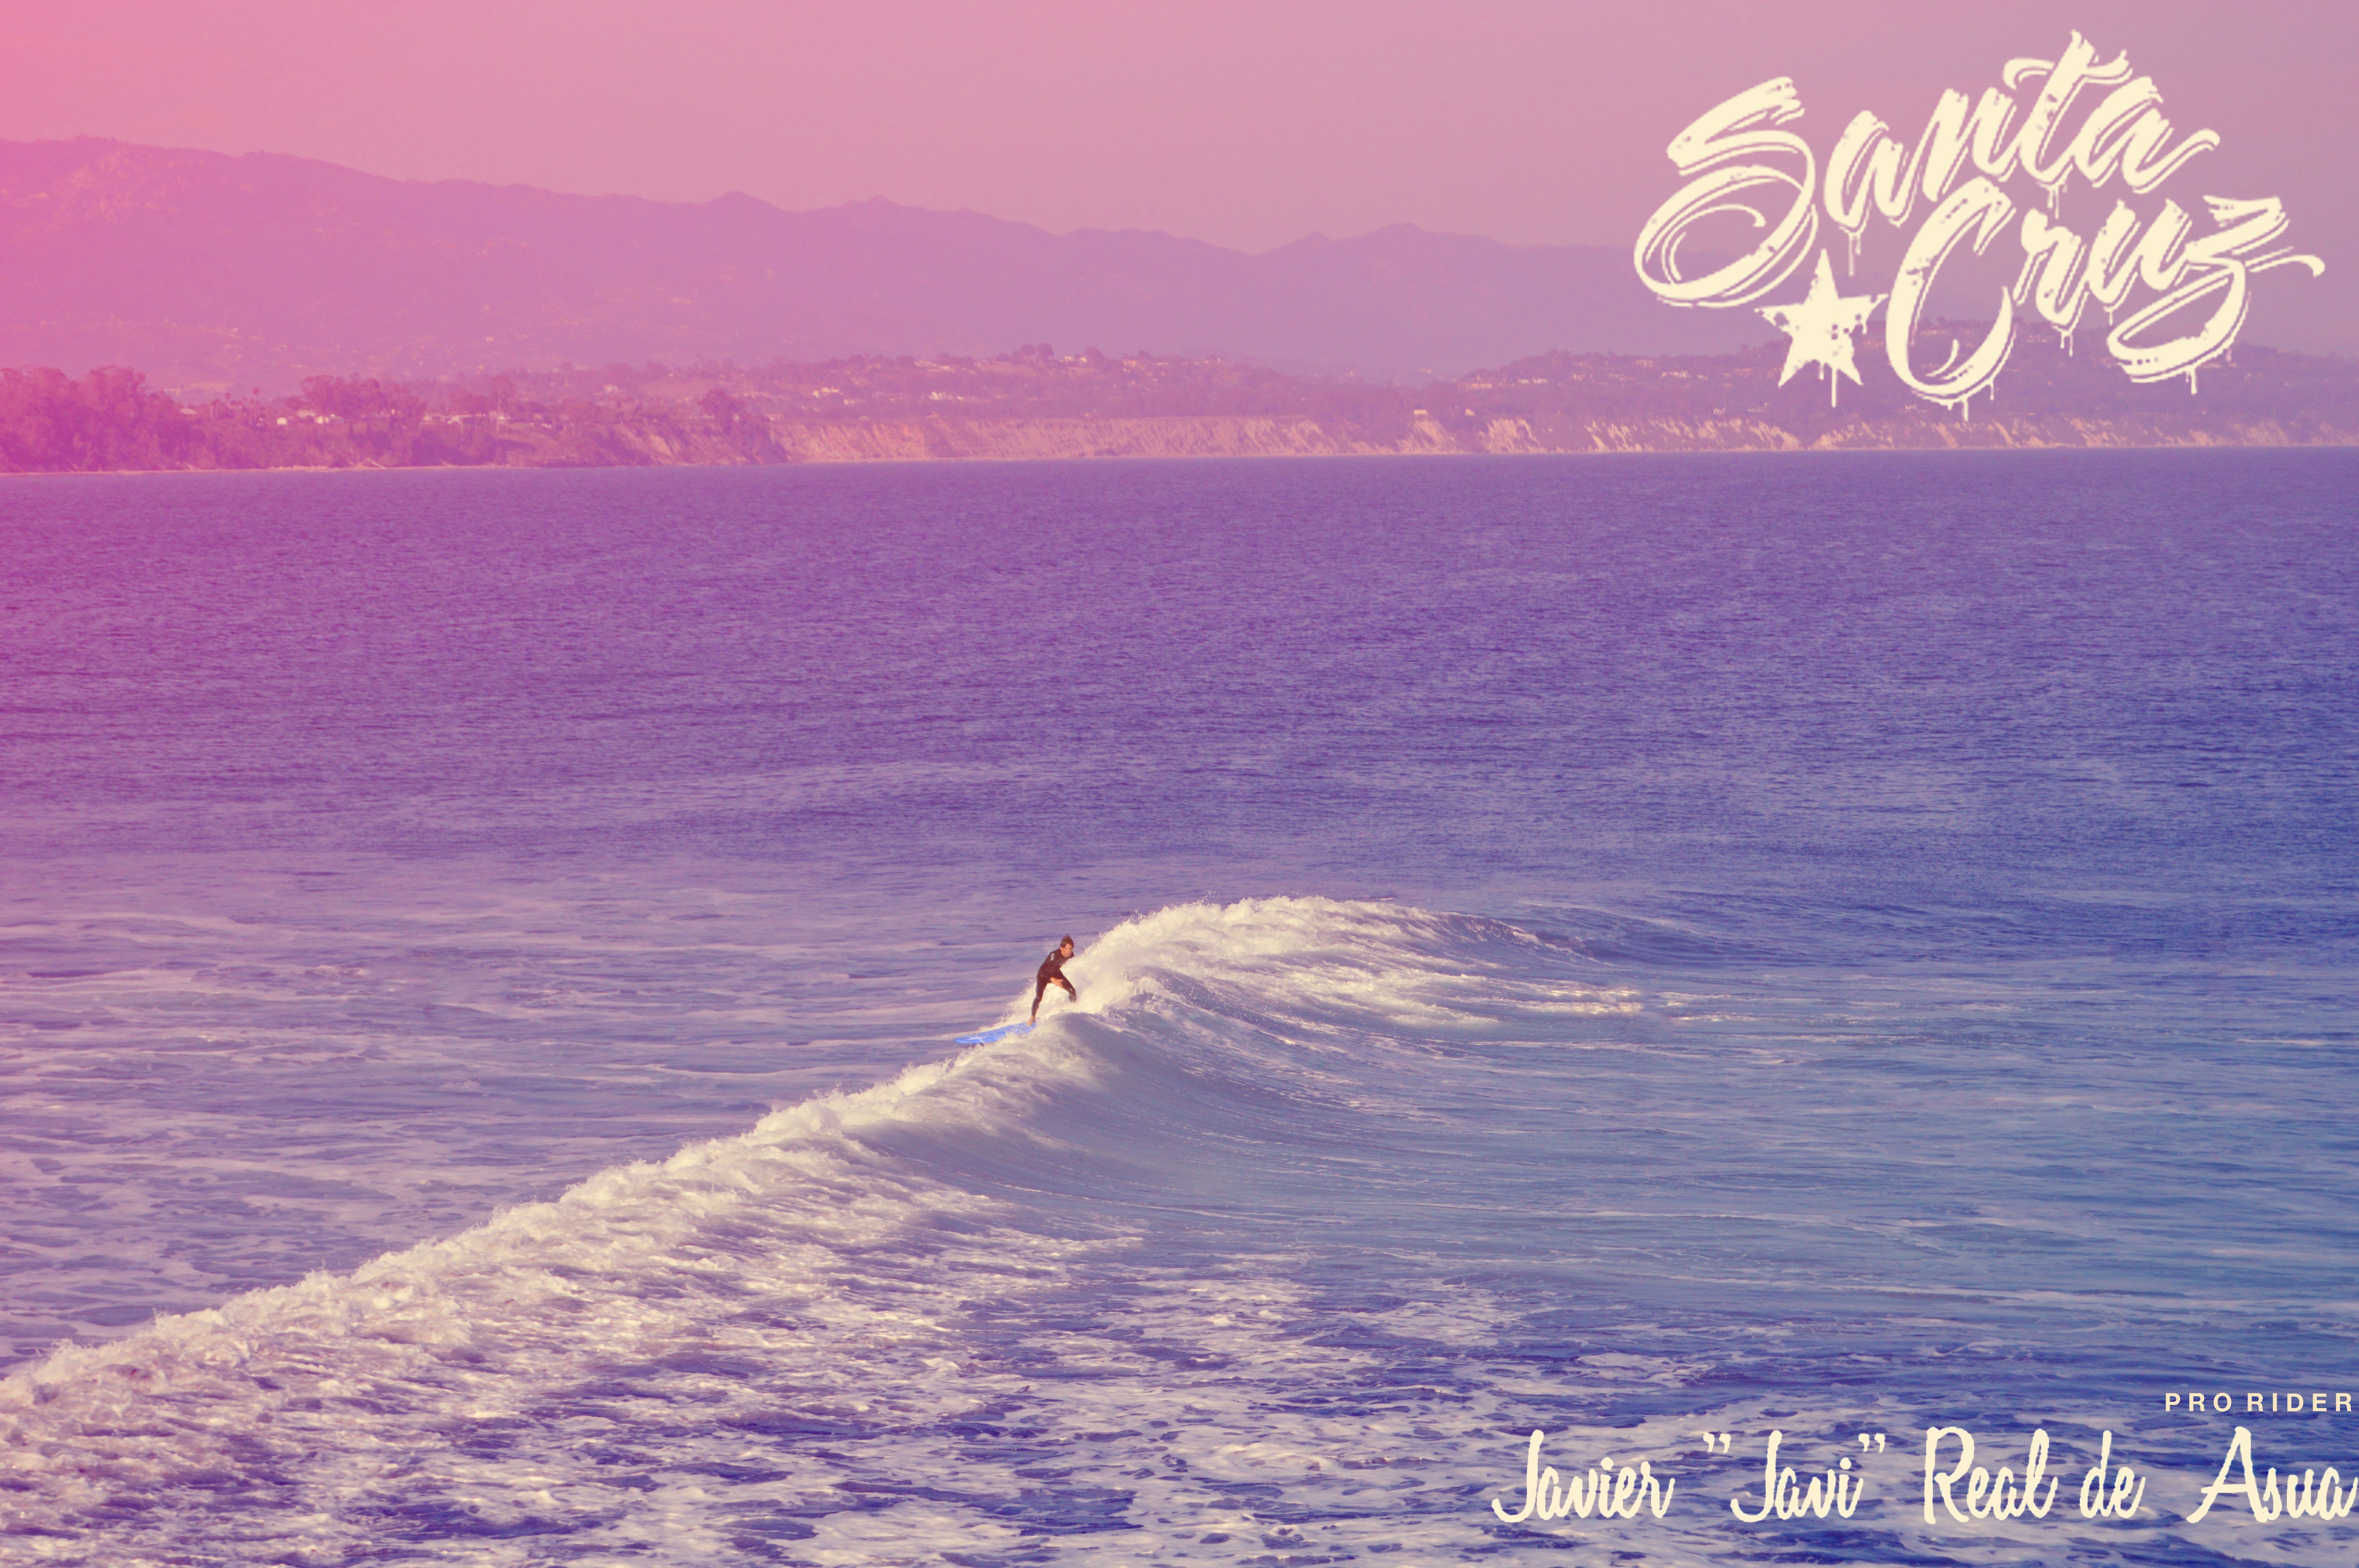 Filter Photoshop Surfing Santa Cruz California Hd Wallpapers Desktop And Mobile Images Photos